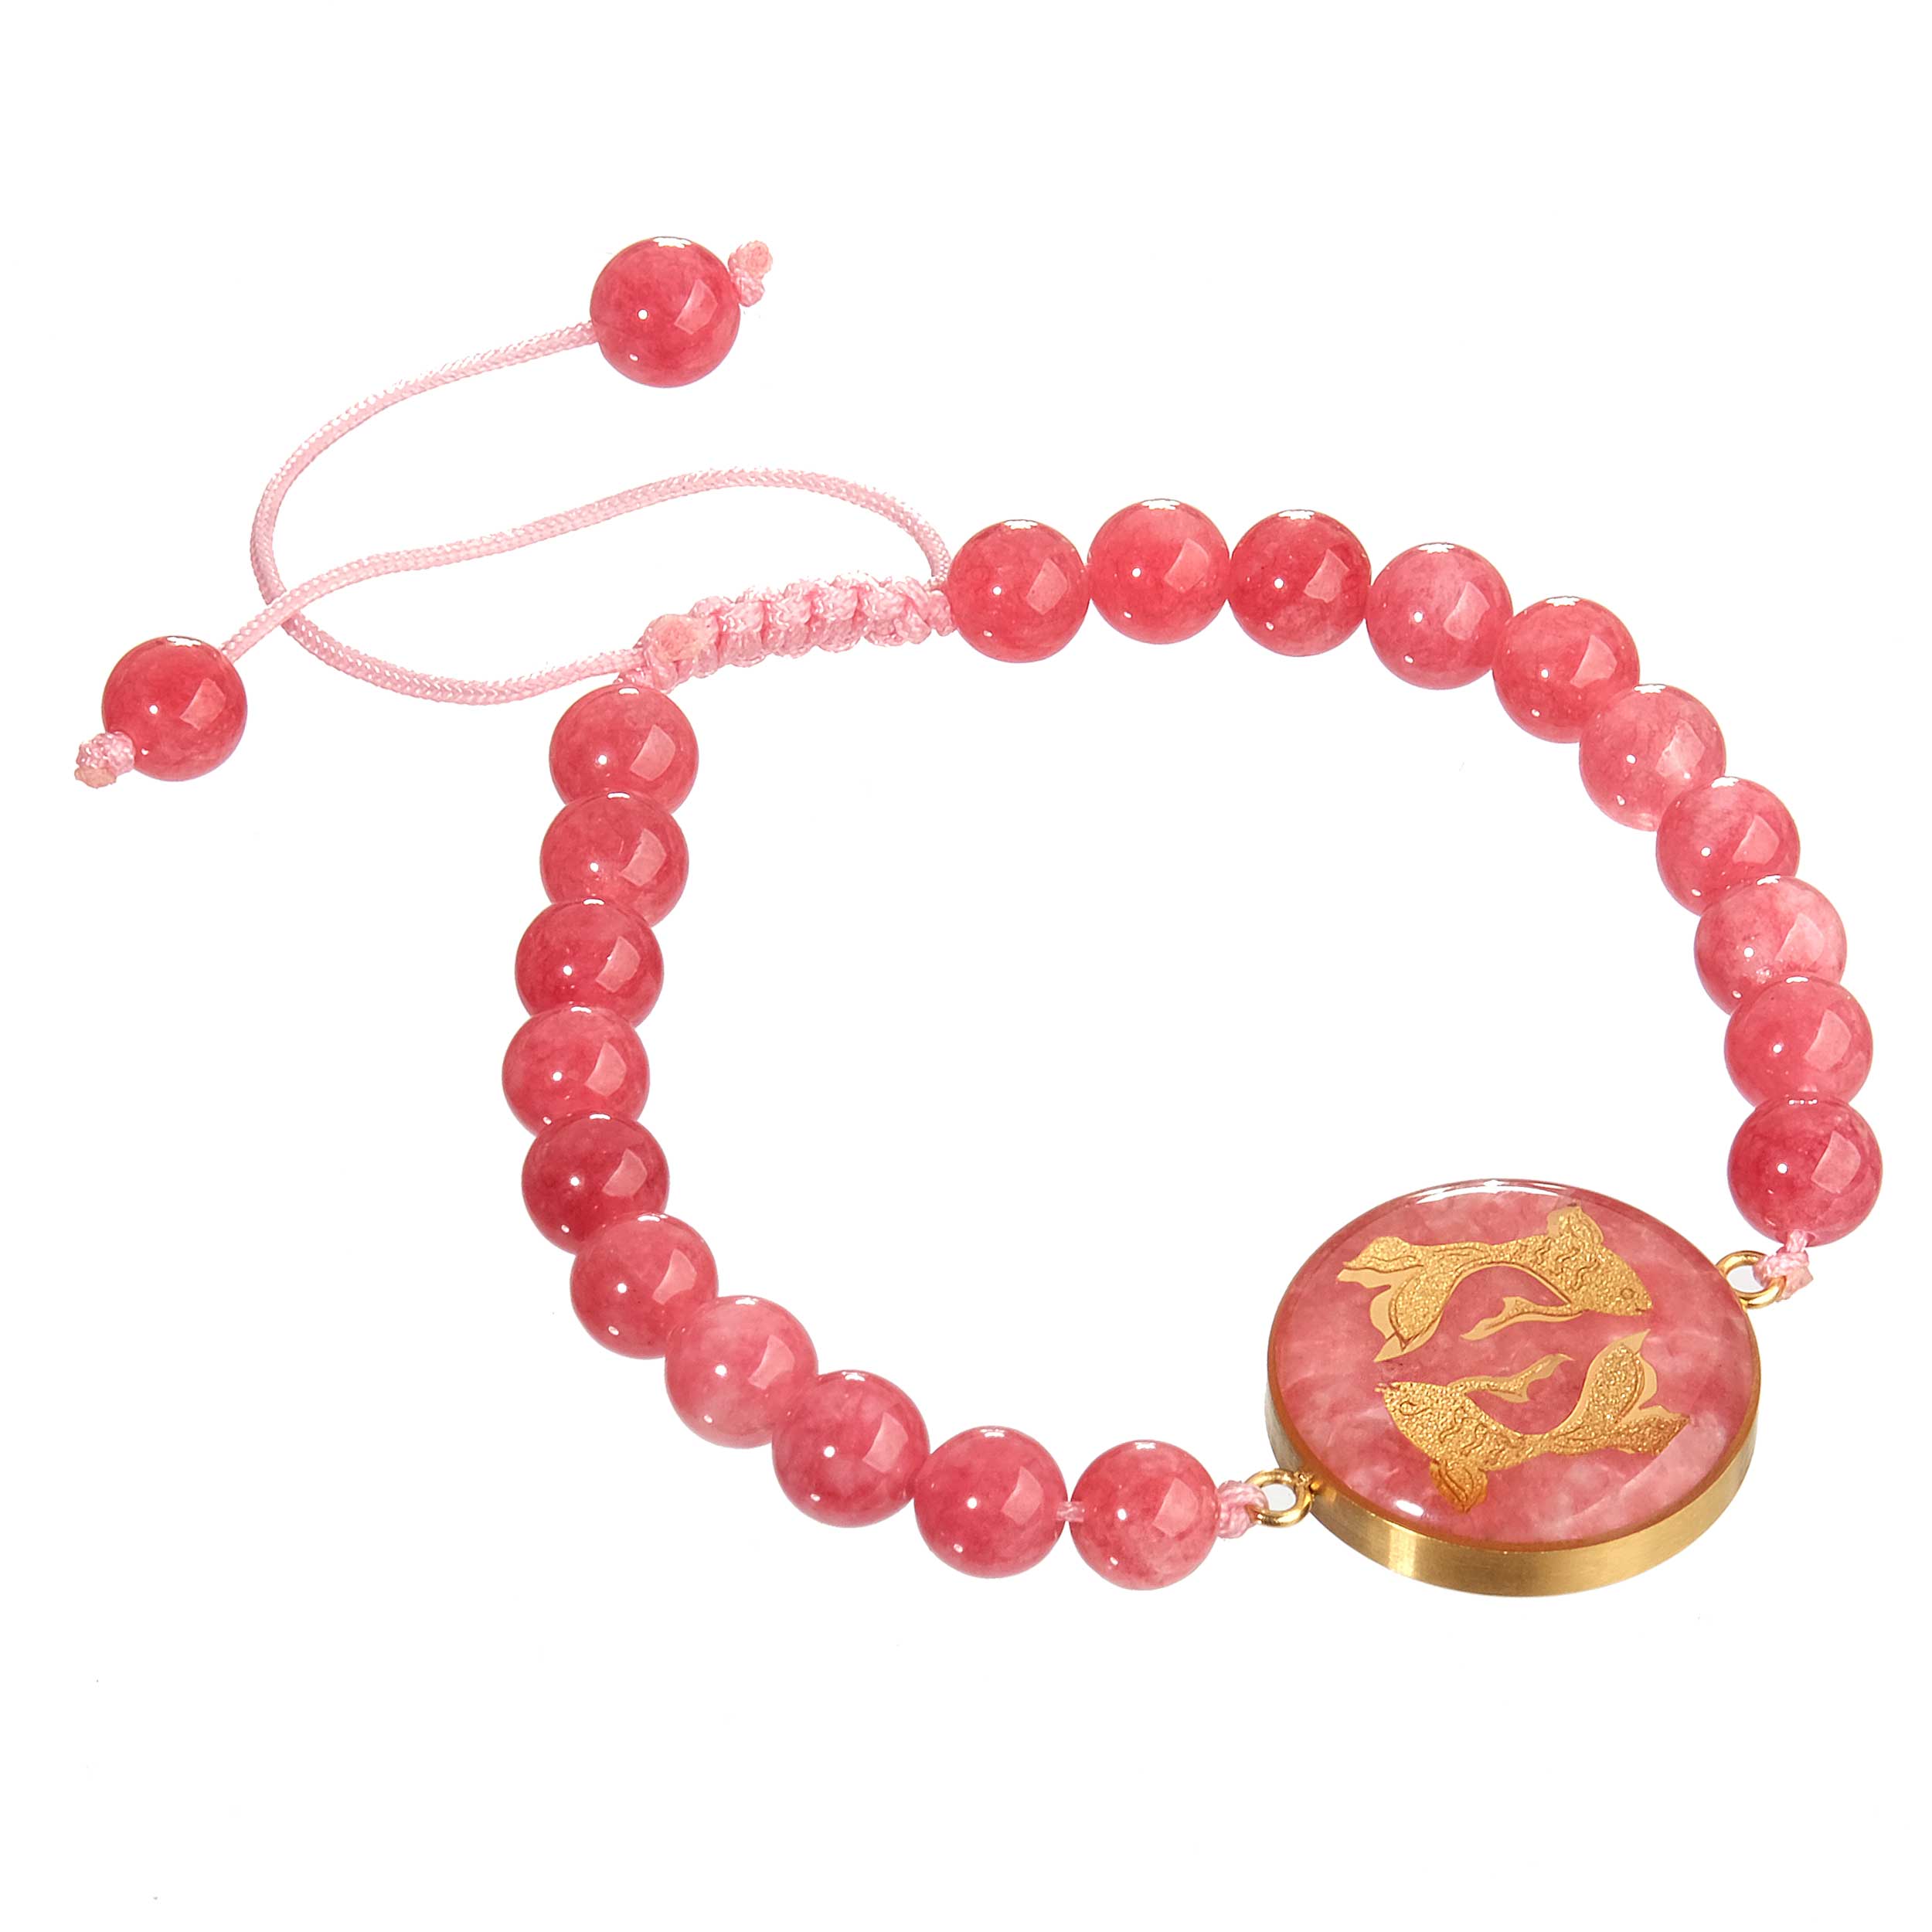 Pink jade pink bracelet with 24 carat gold leaf with the symbol design of March